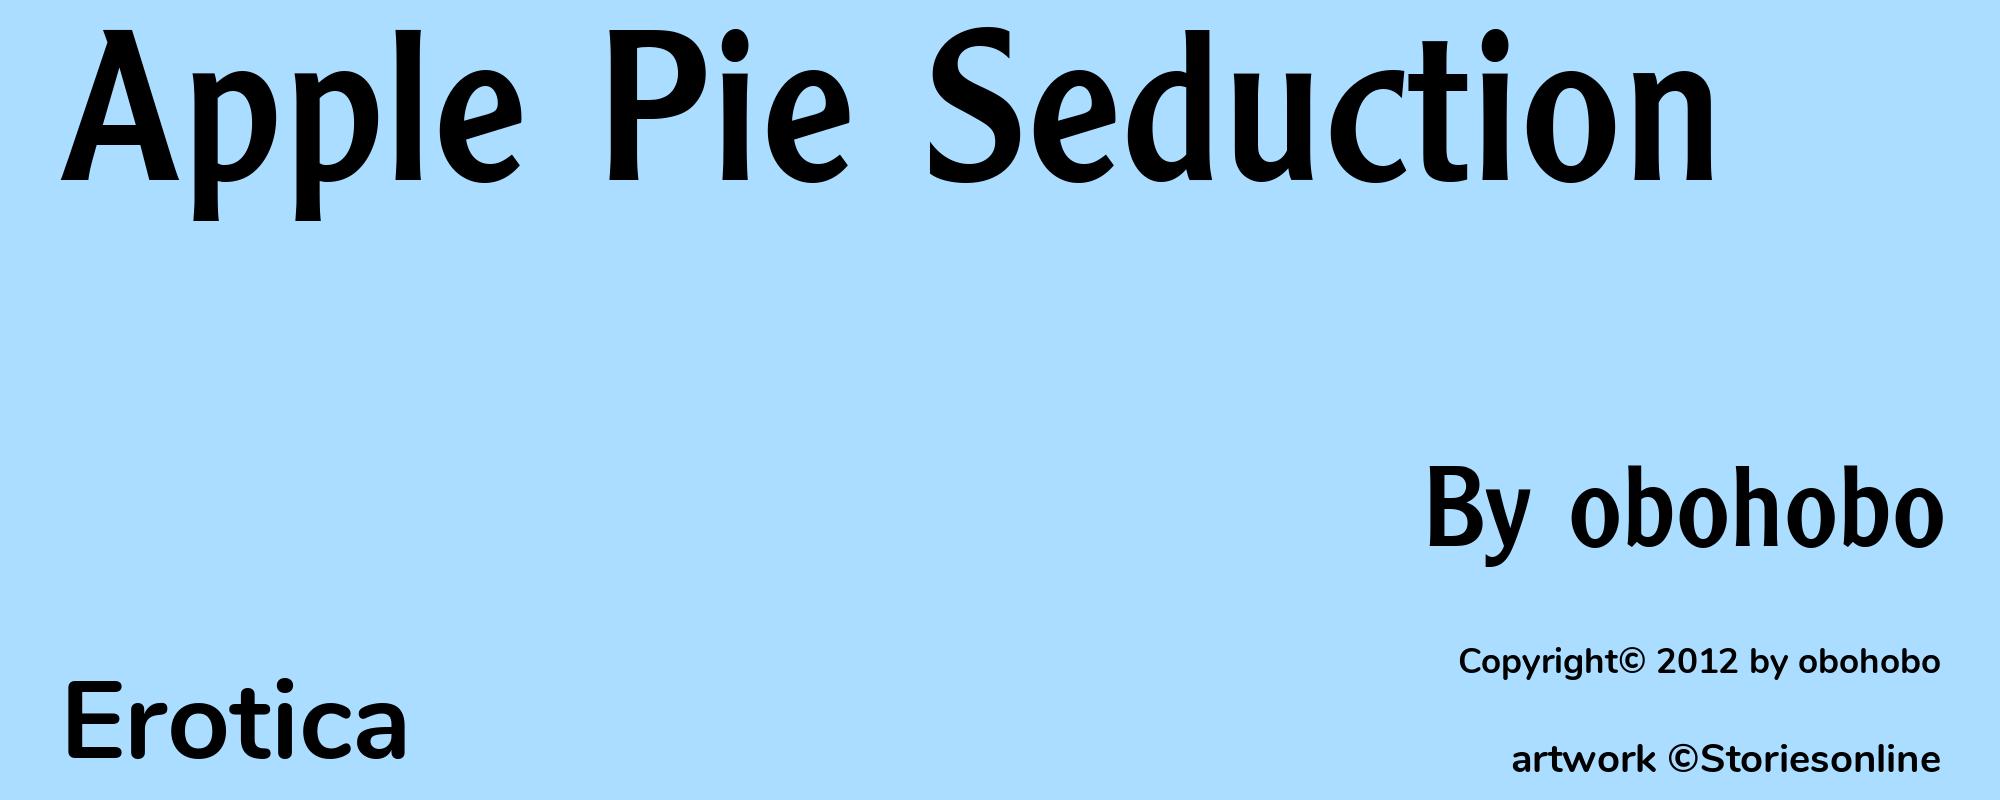 Apple Pie Seduction - Cover